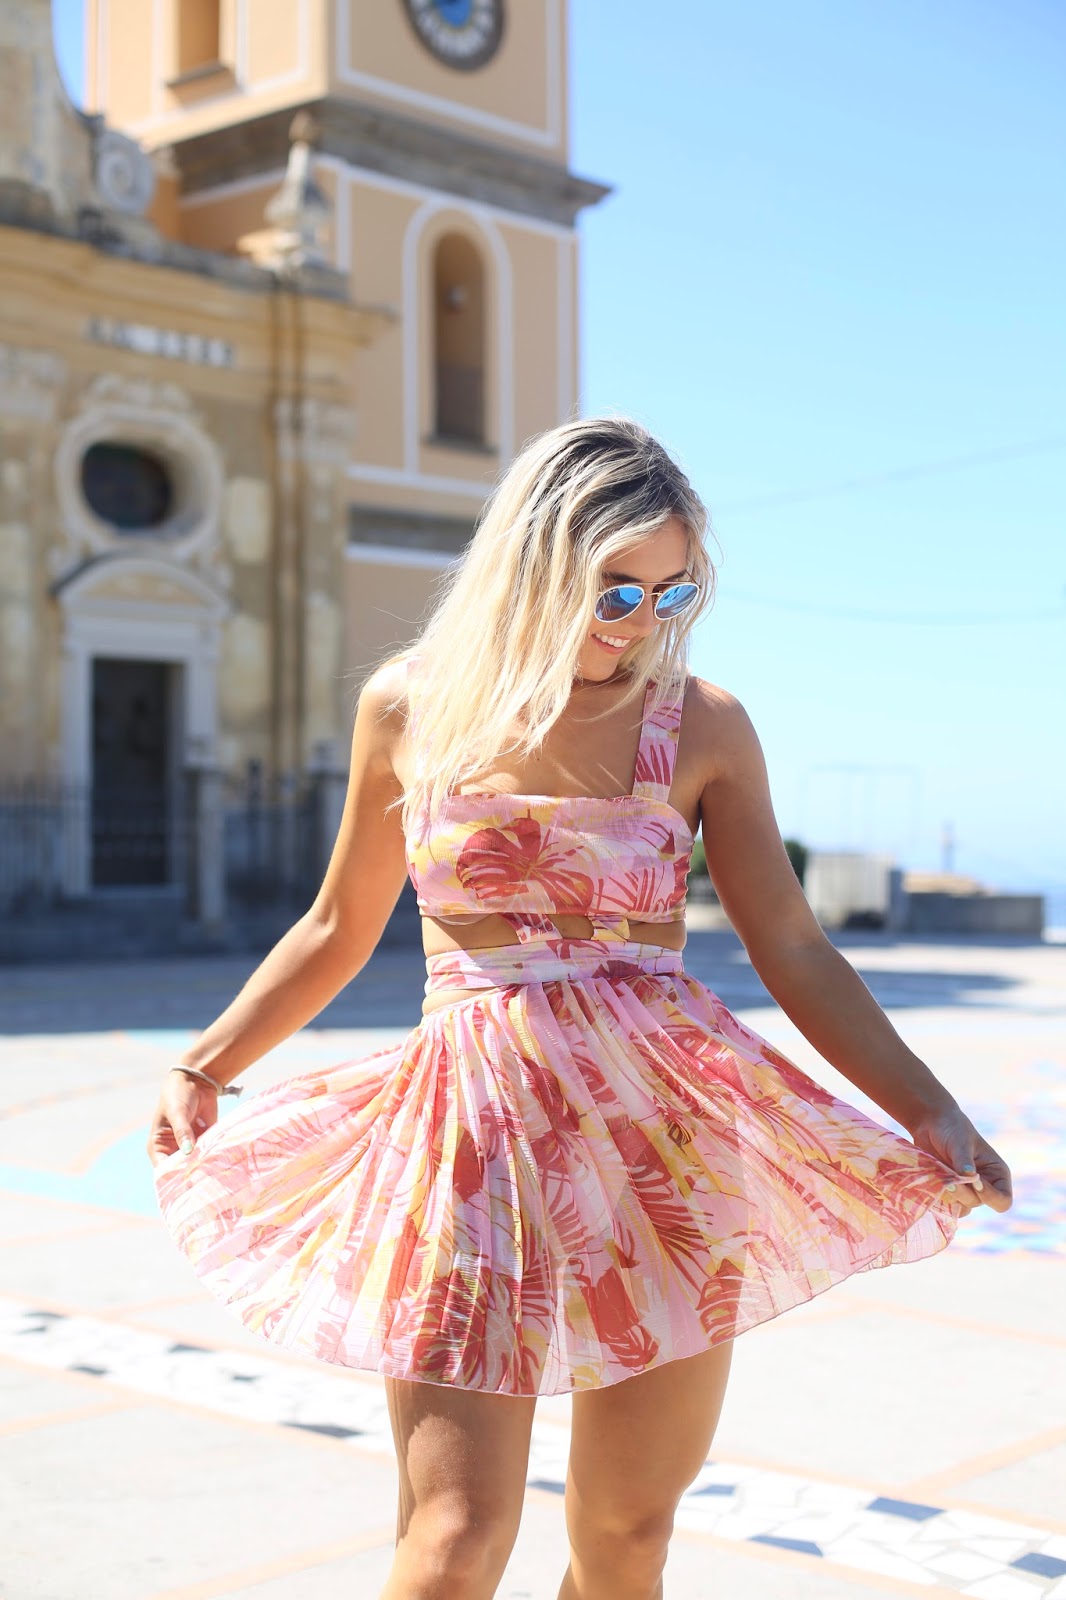 Emtalks The Best Summer Clothing In Italy, Amalfi Coast